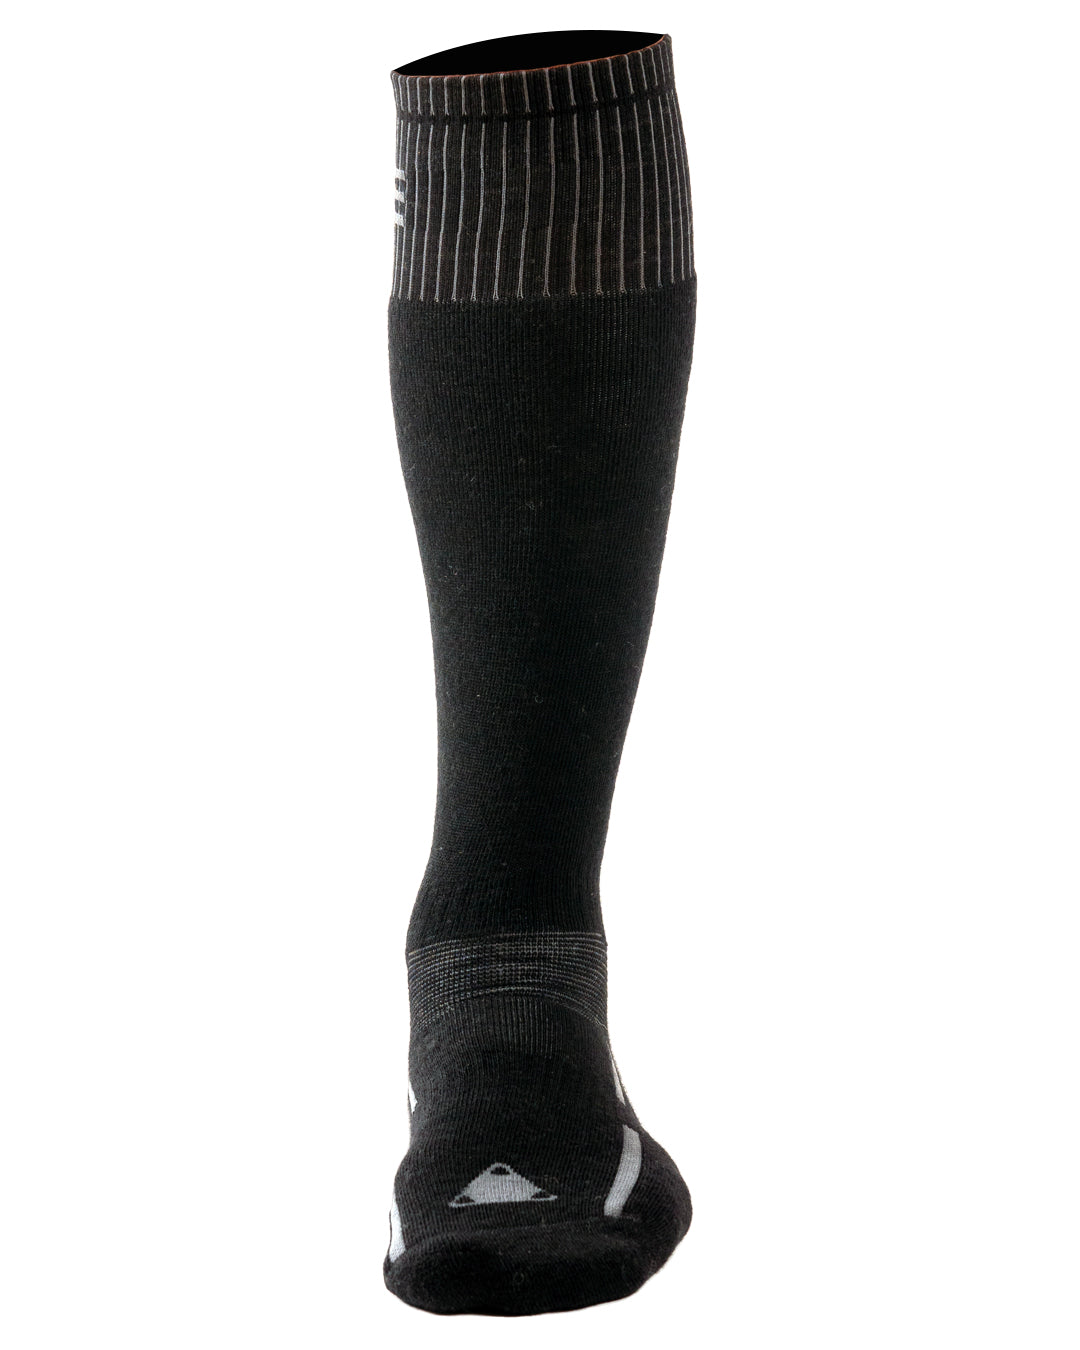 Tobe Outerwear Ovis Merino Socks Jet Black 400221-001-